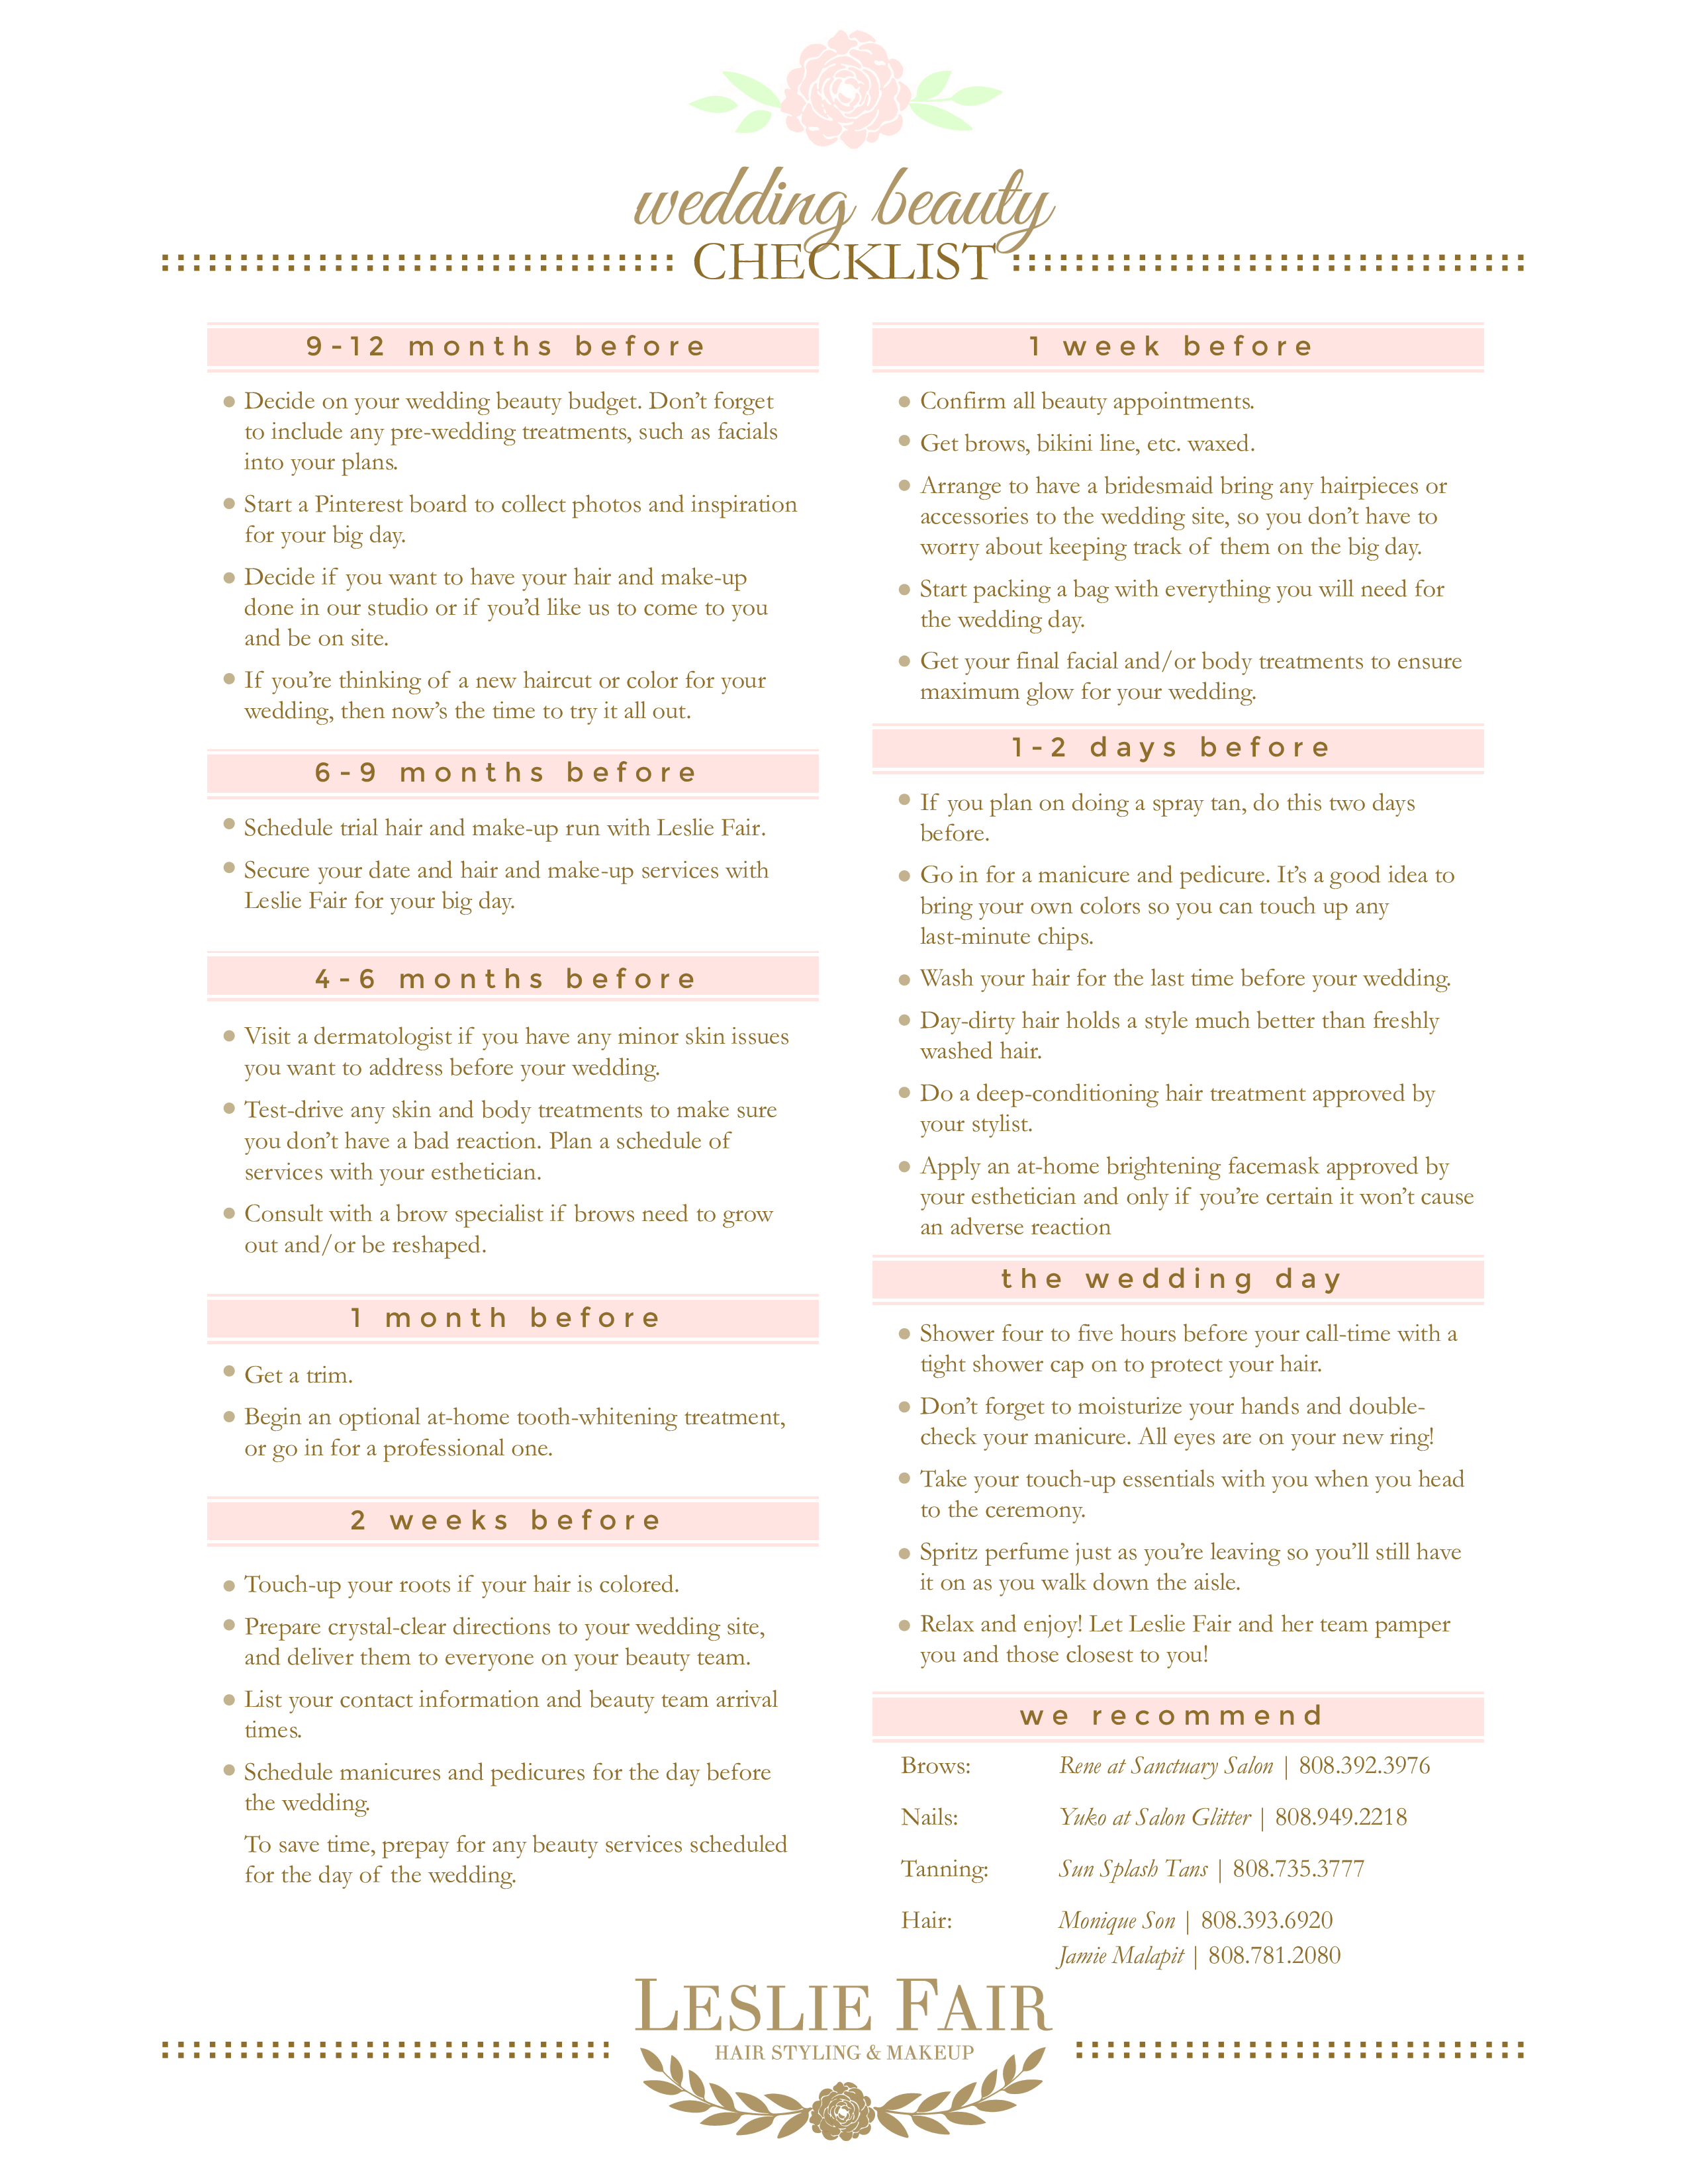 printable wedding beauty checklist template